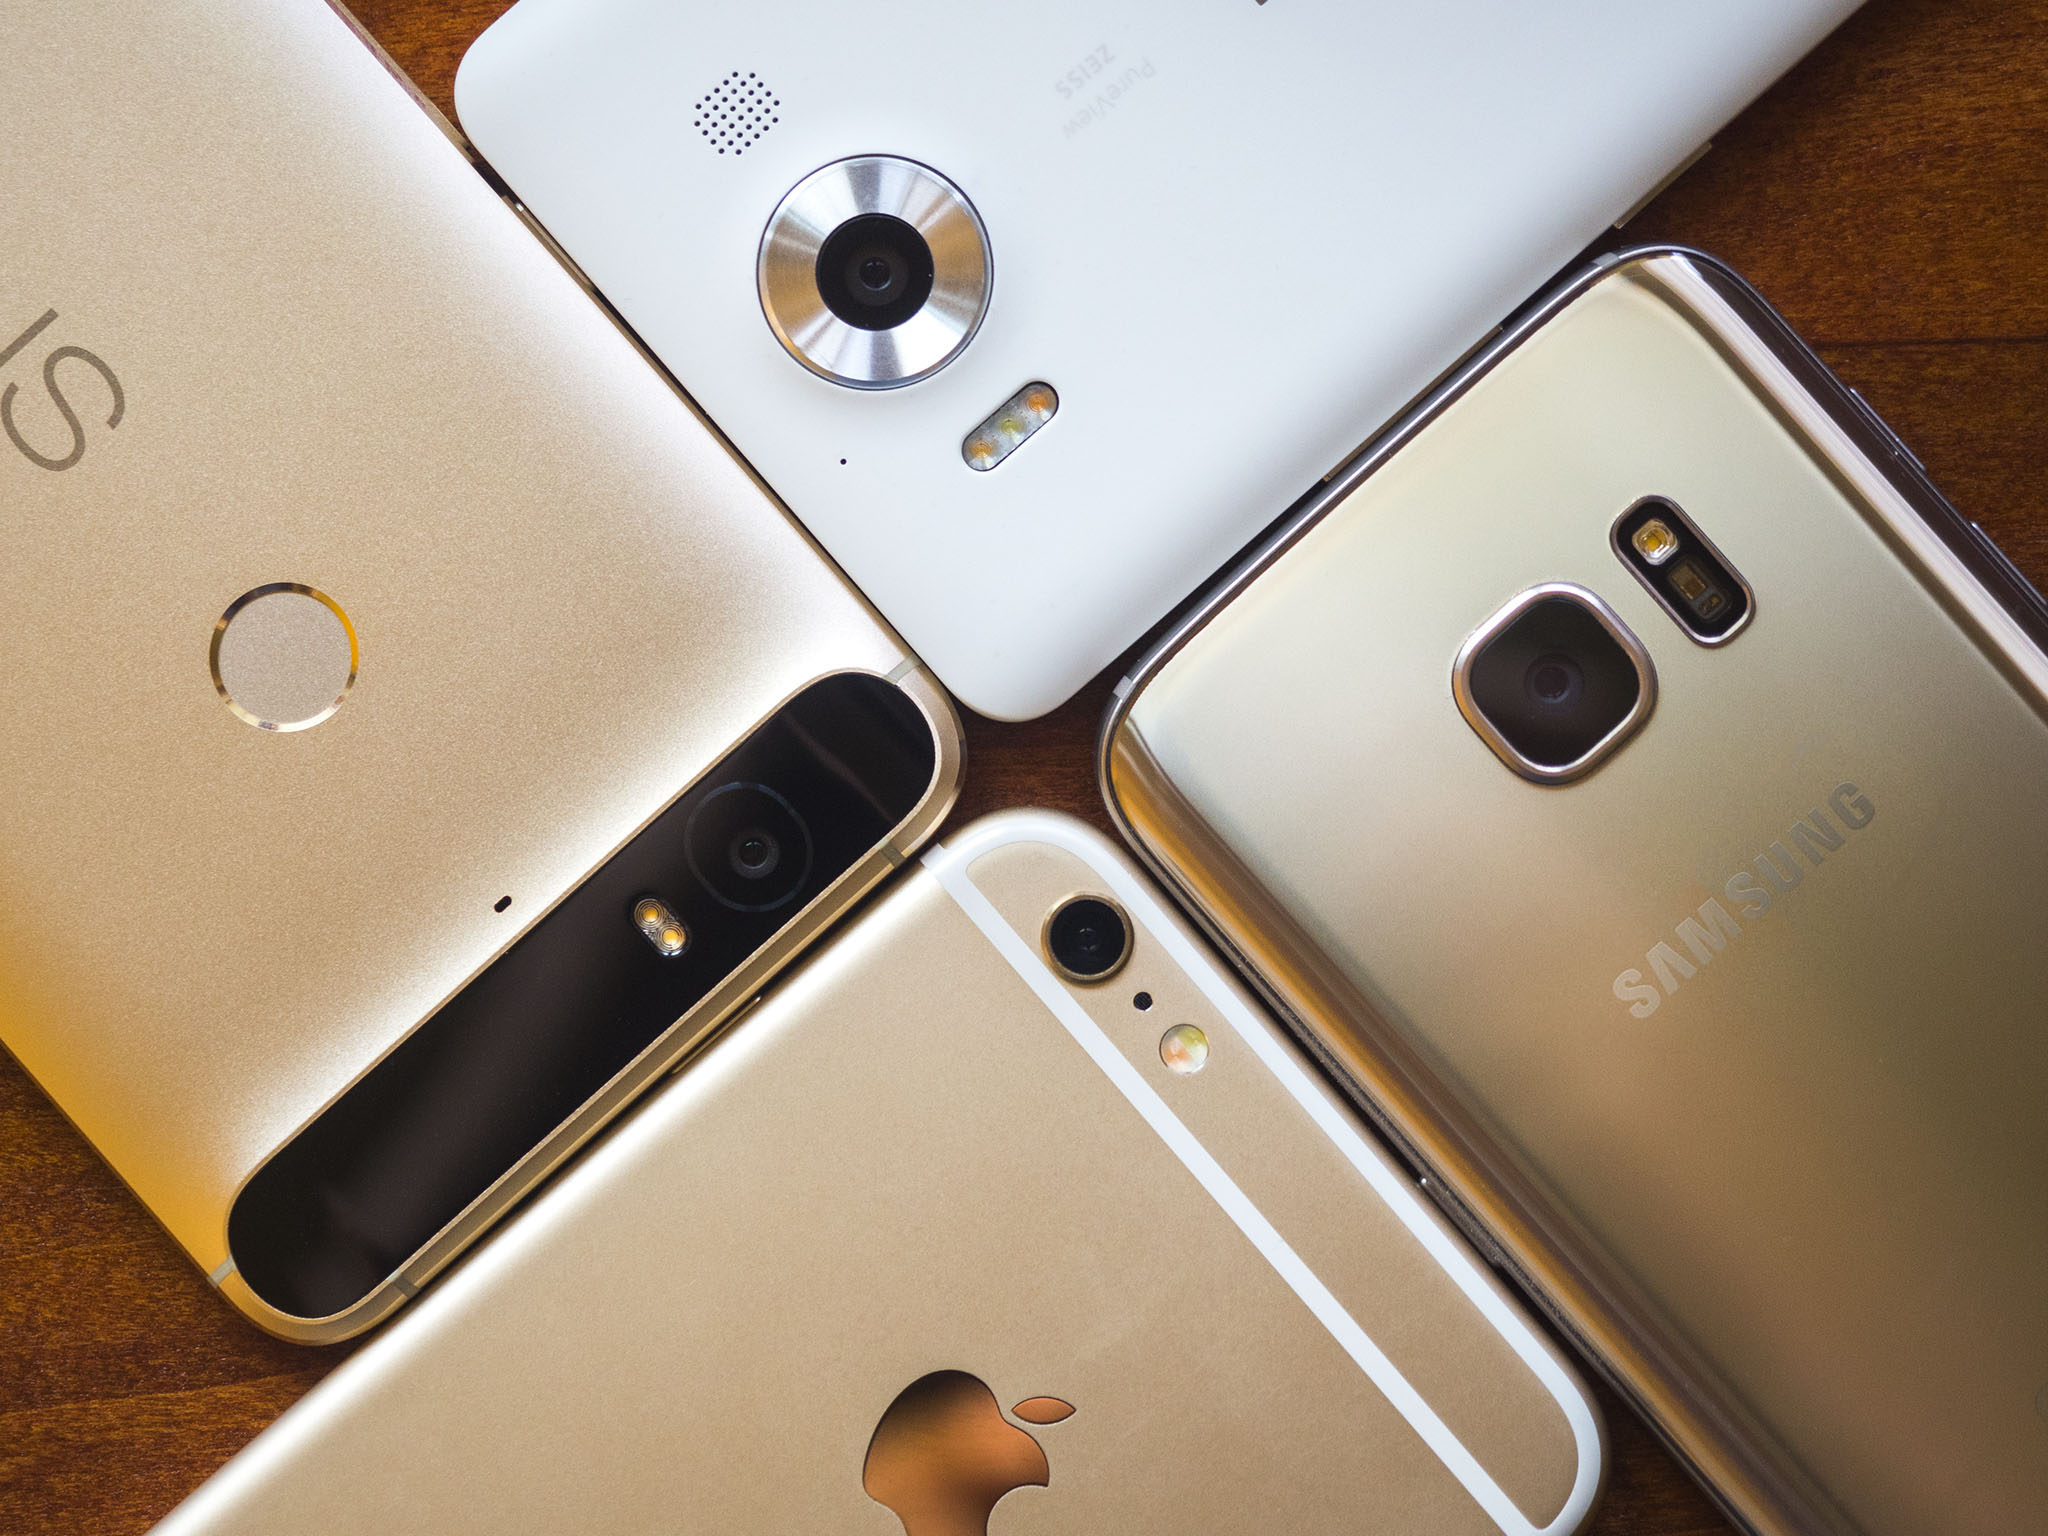 Best smartphone cameras: Galaxy S7 vs. iPhone 6s vs. Nexus 6P vs. Lumia 950